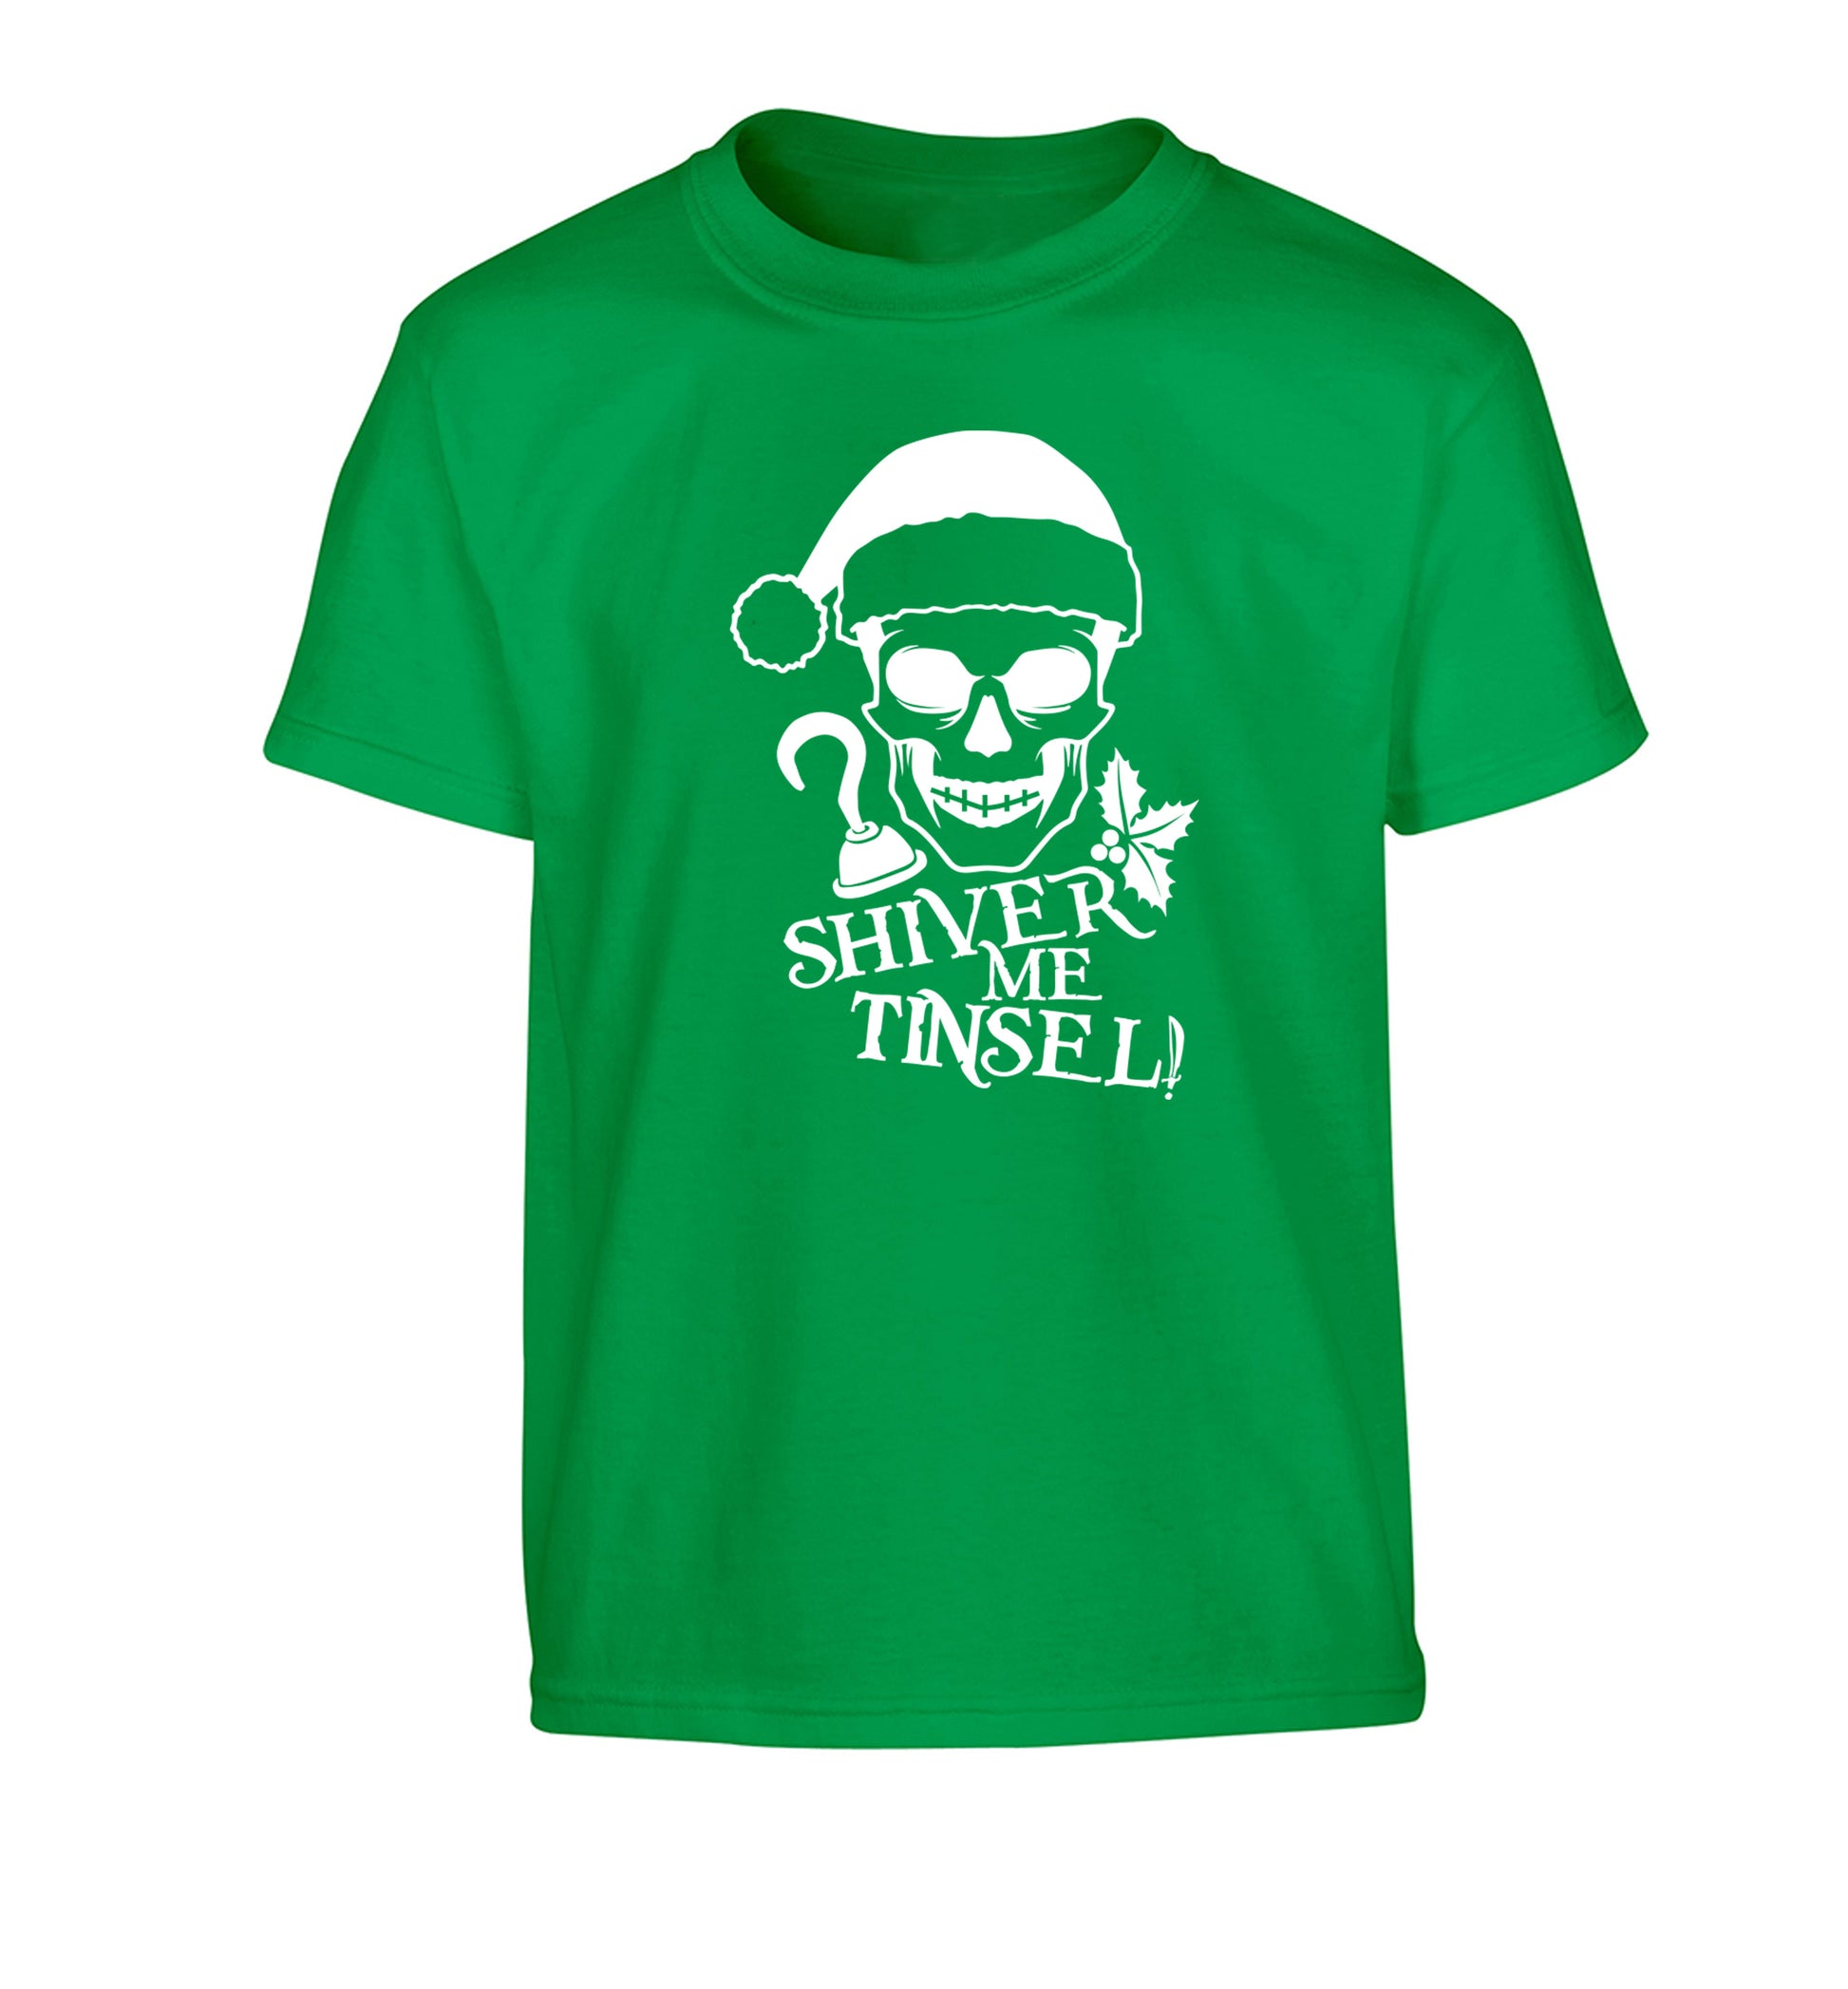 Shiver me tinsel Children's green Tshirt 12-14 Years